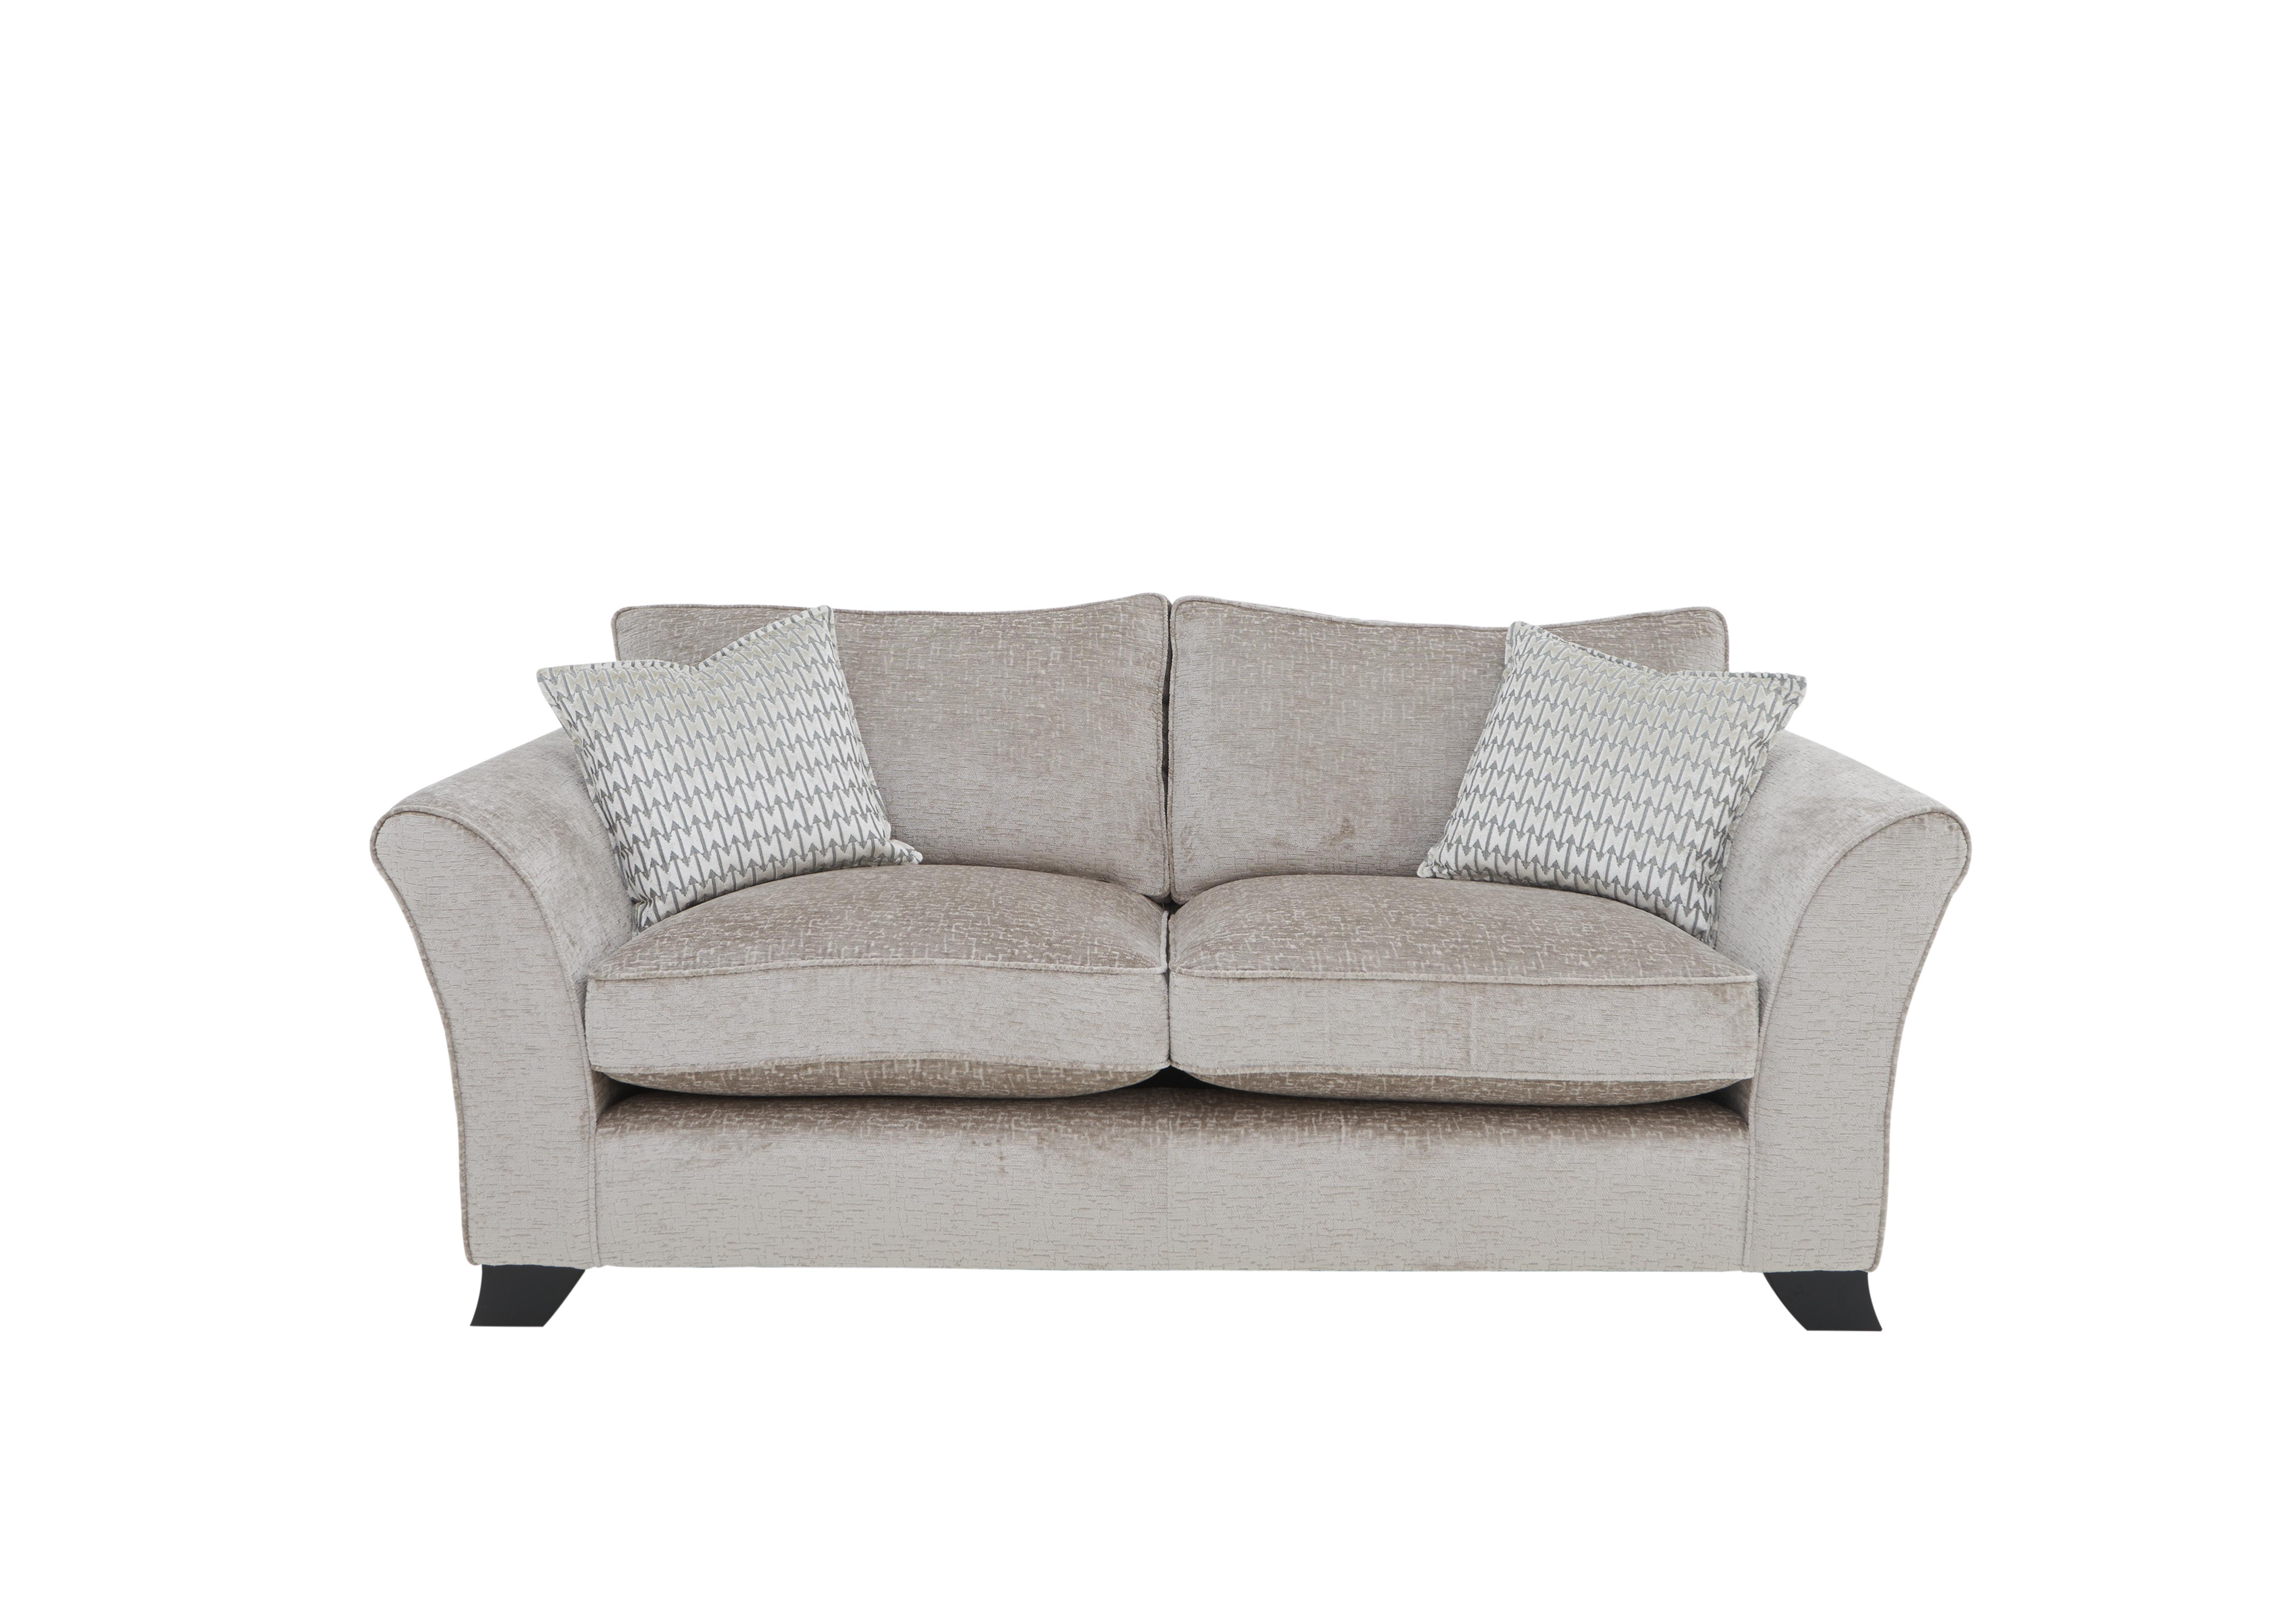 Sasha 3 Seater Classic Back Sofa in Alexandra Truffle on Furniture Village